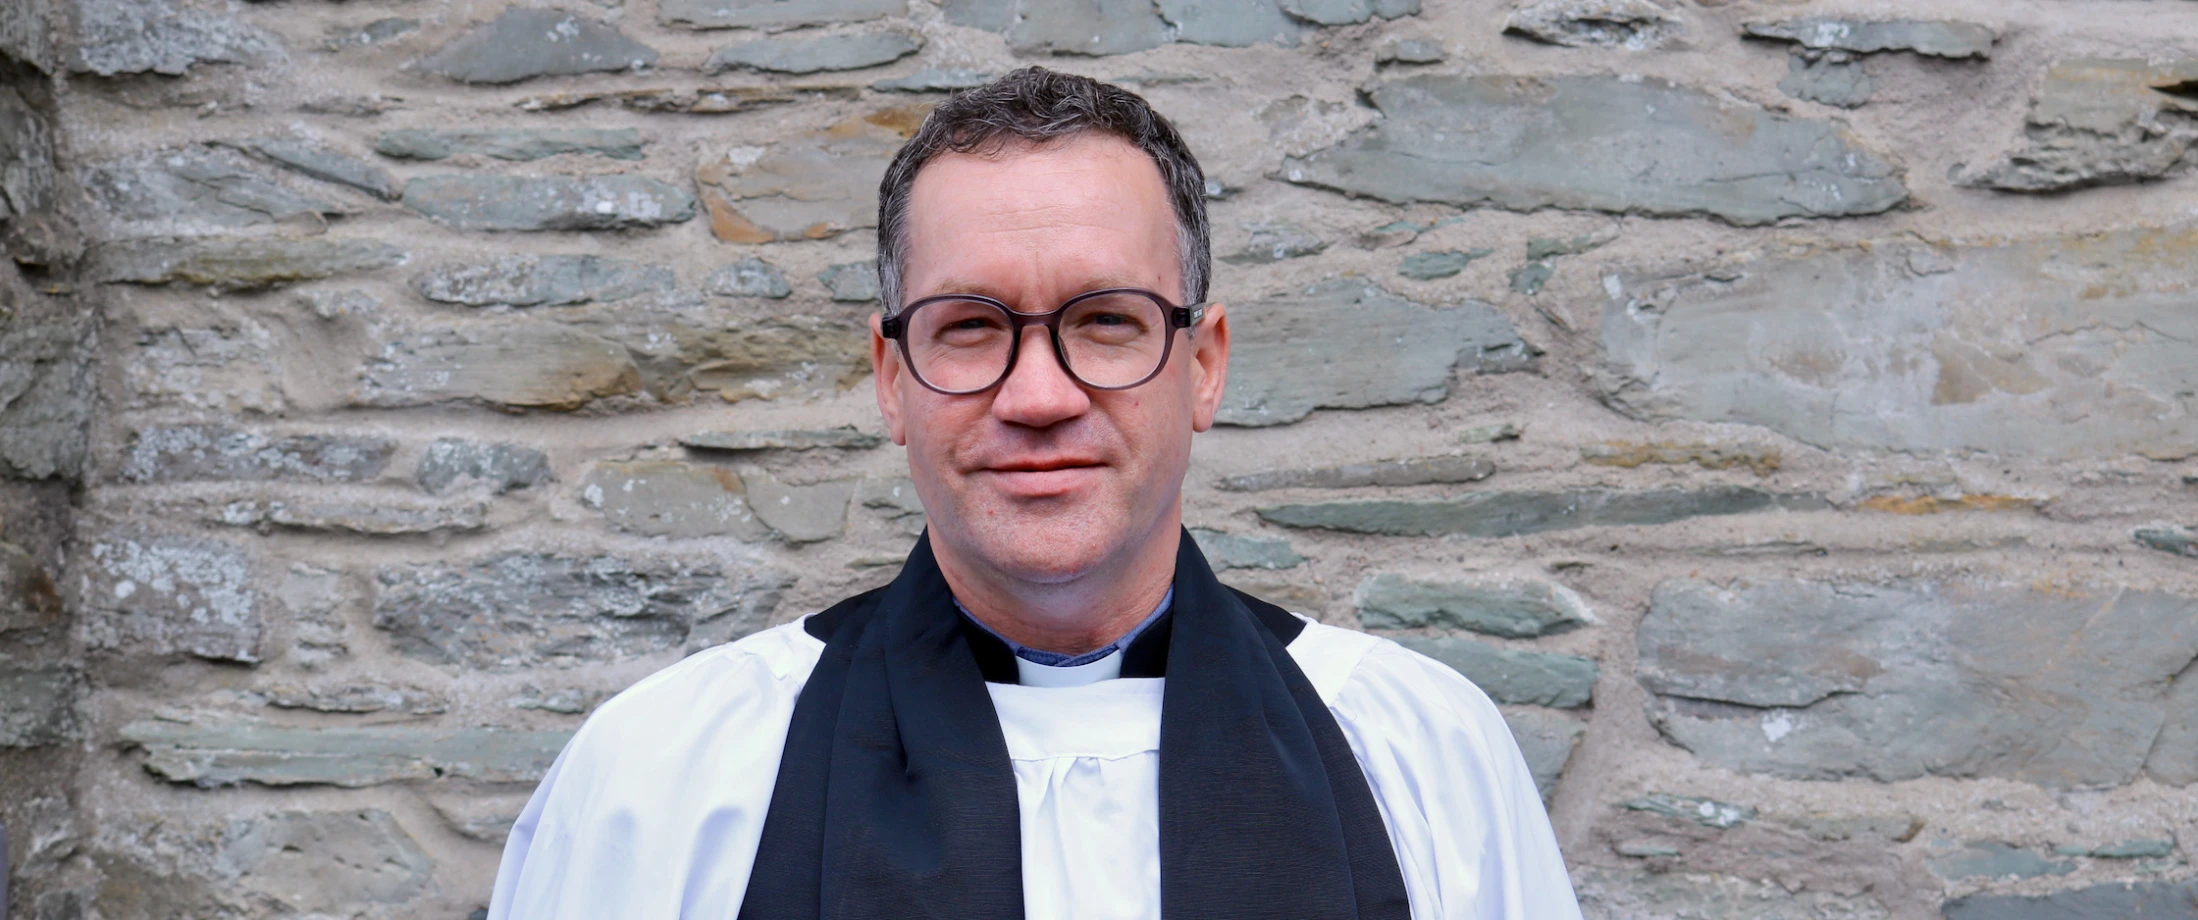 Revd Cosmin Pascu is ordained presbyter